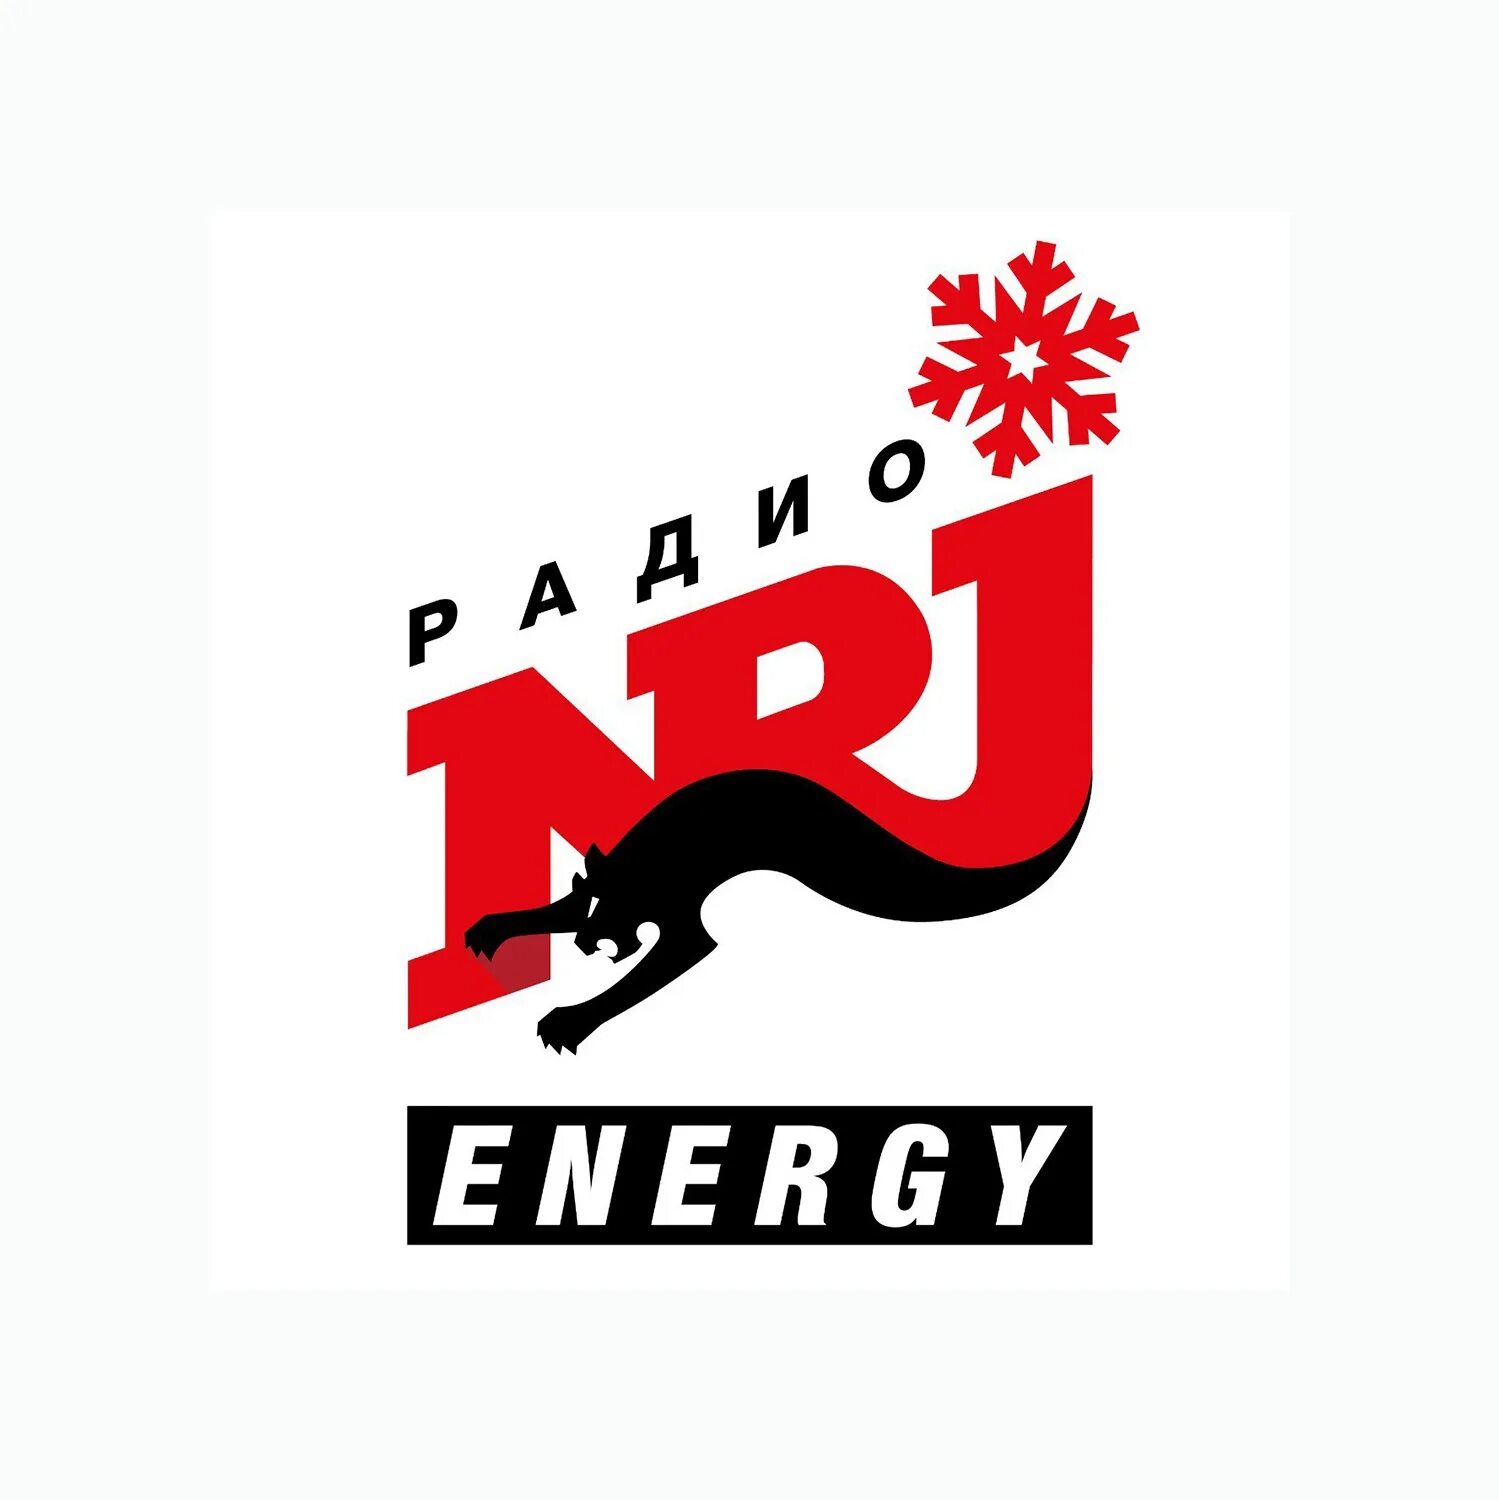 Nrg радио. Радио Energy NRJ. Логотипы радиостанций. Энерджи логотип. Логотип радиостанции Энерджи.